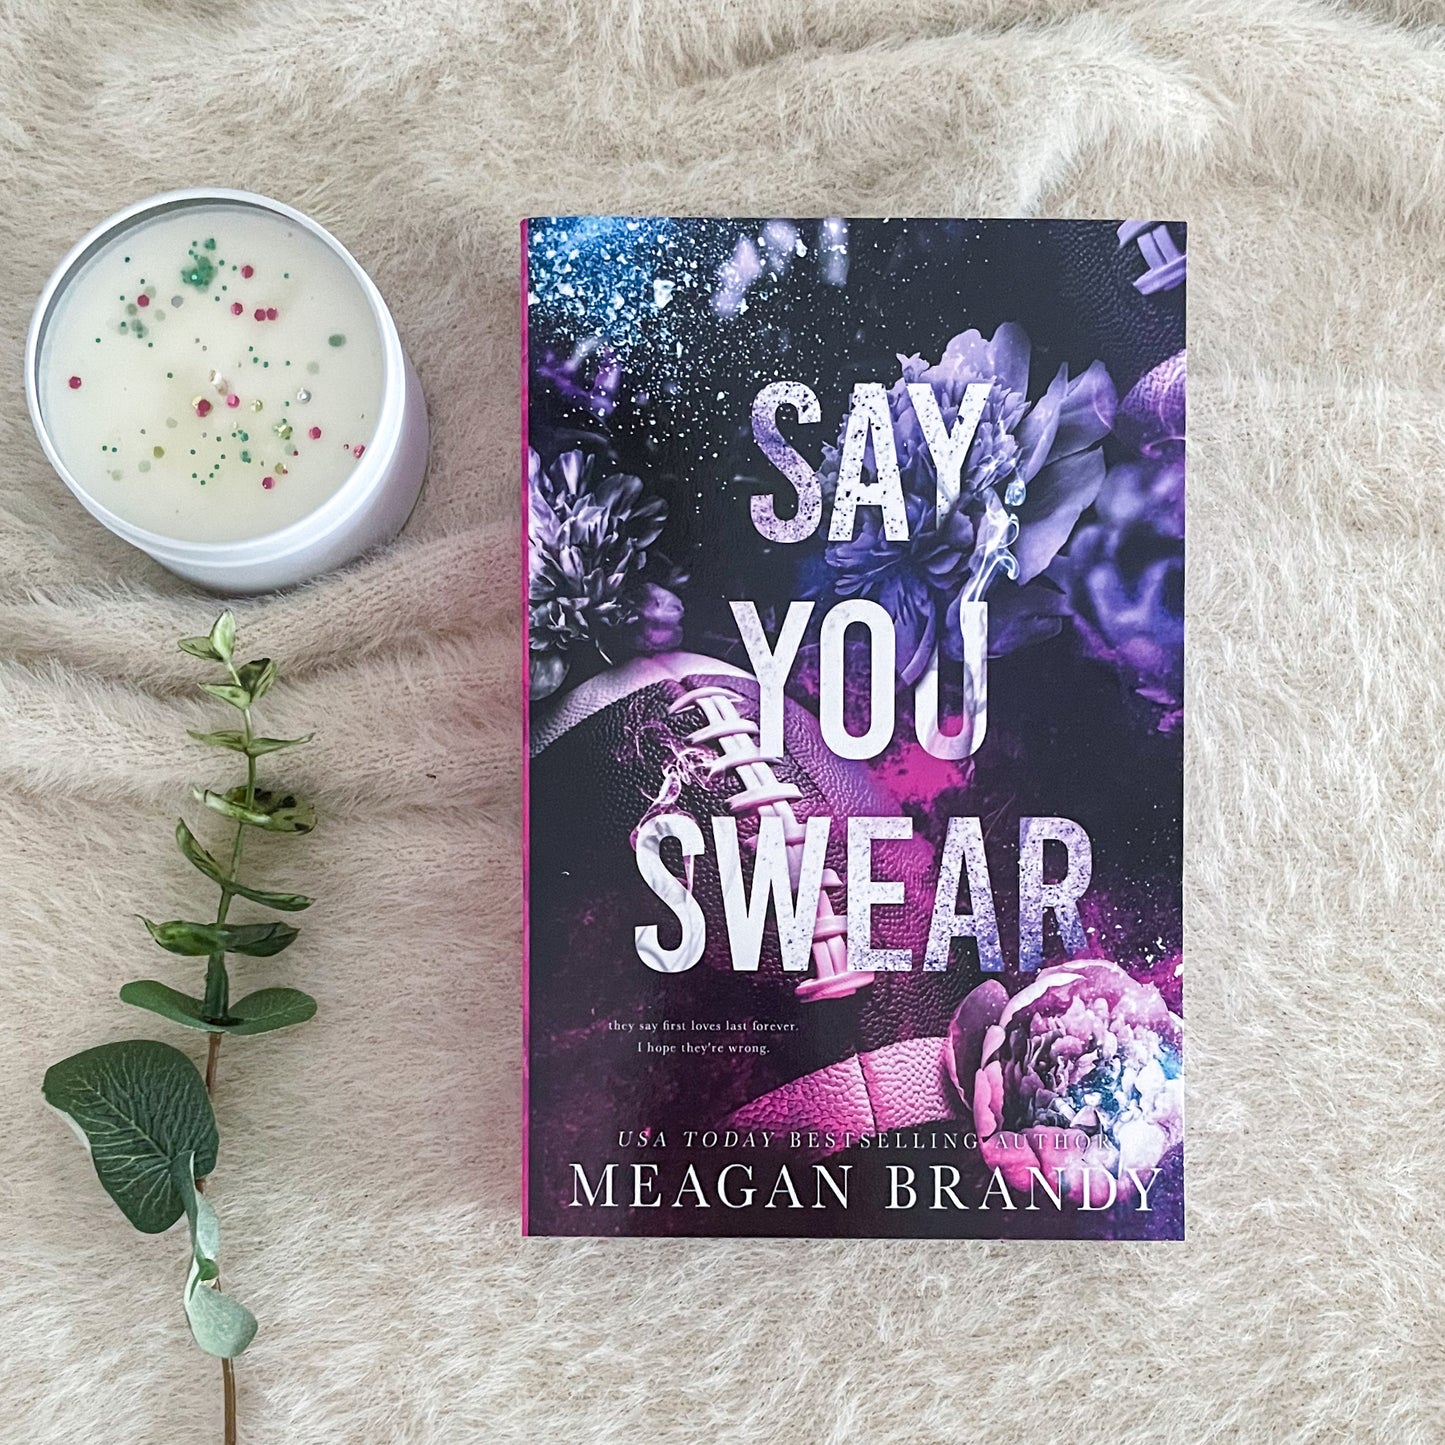 Say You Swear by Meagan Brandy